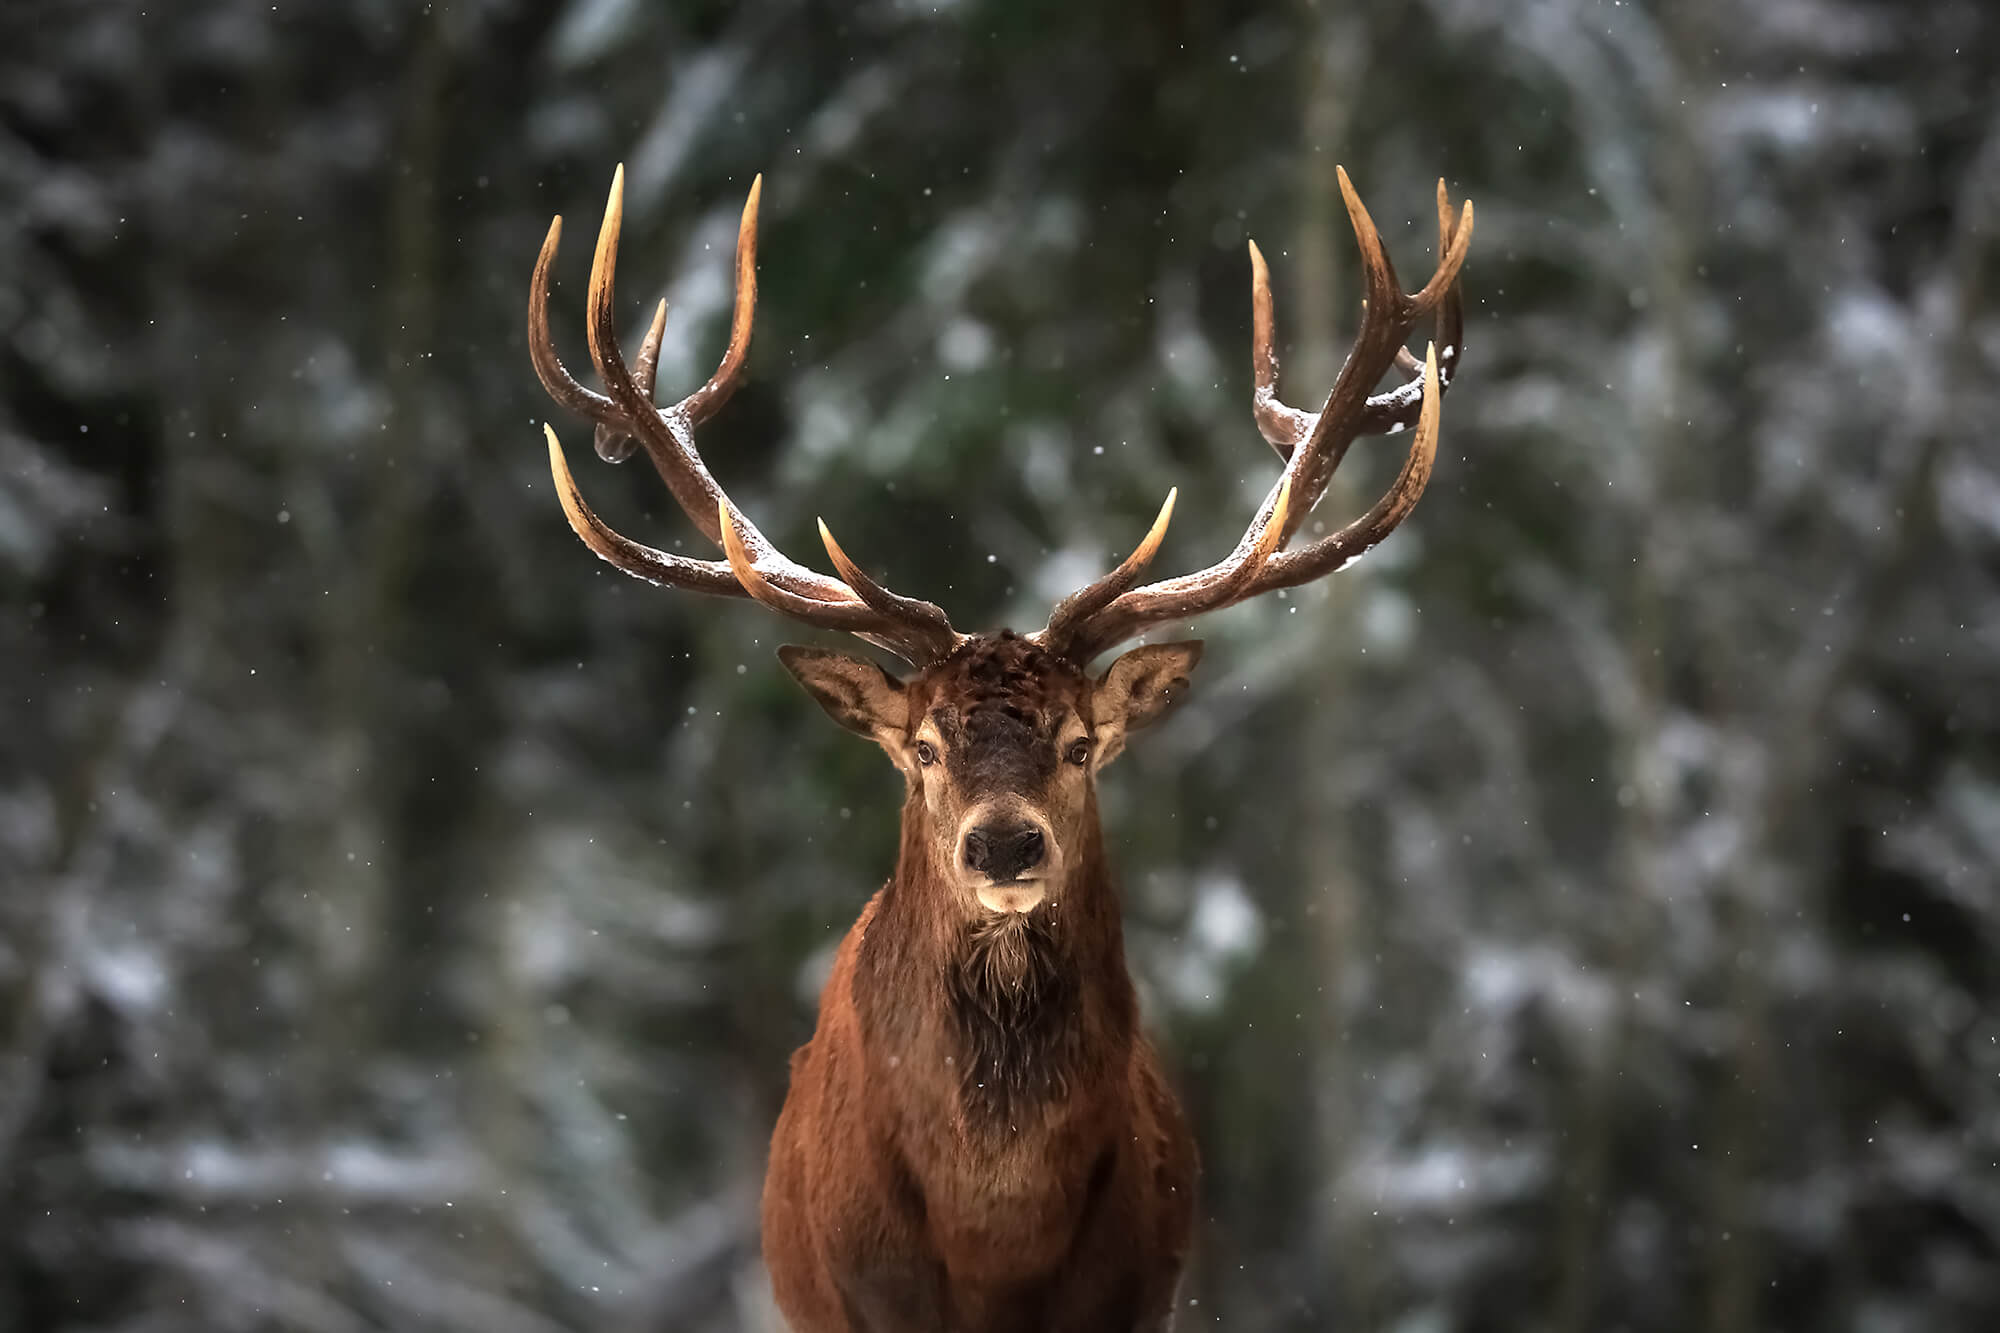 Deer in snow hunt deer and game using deer calendar movements